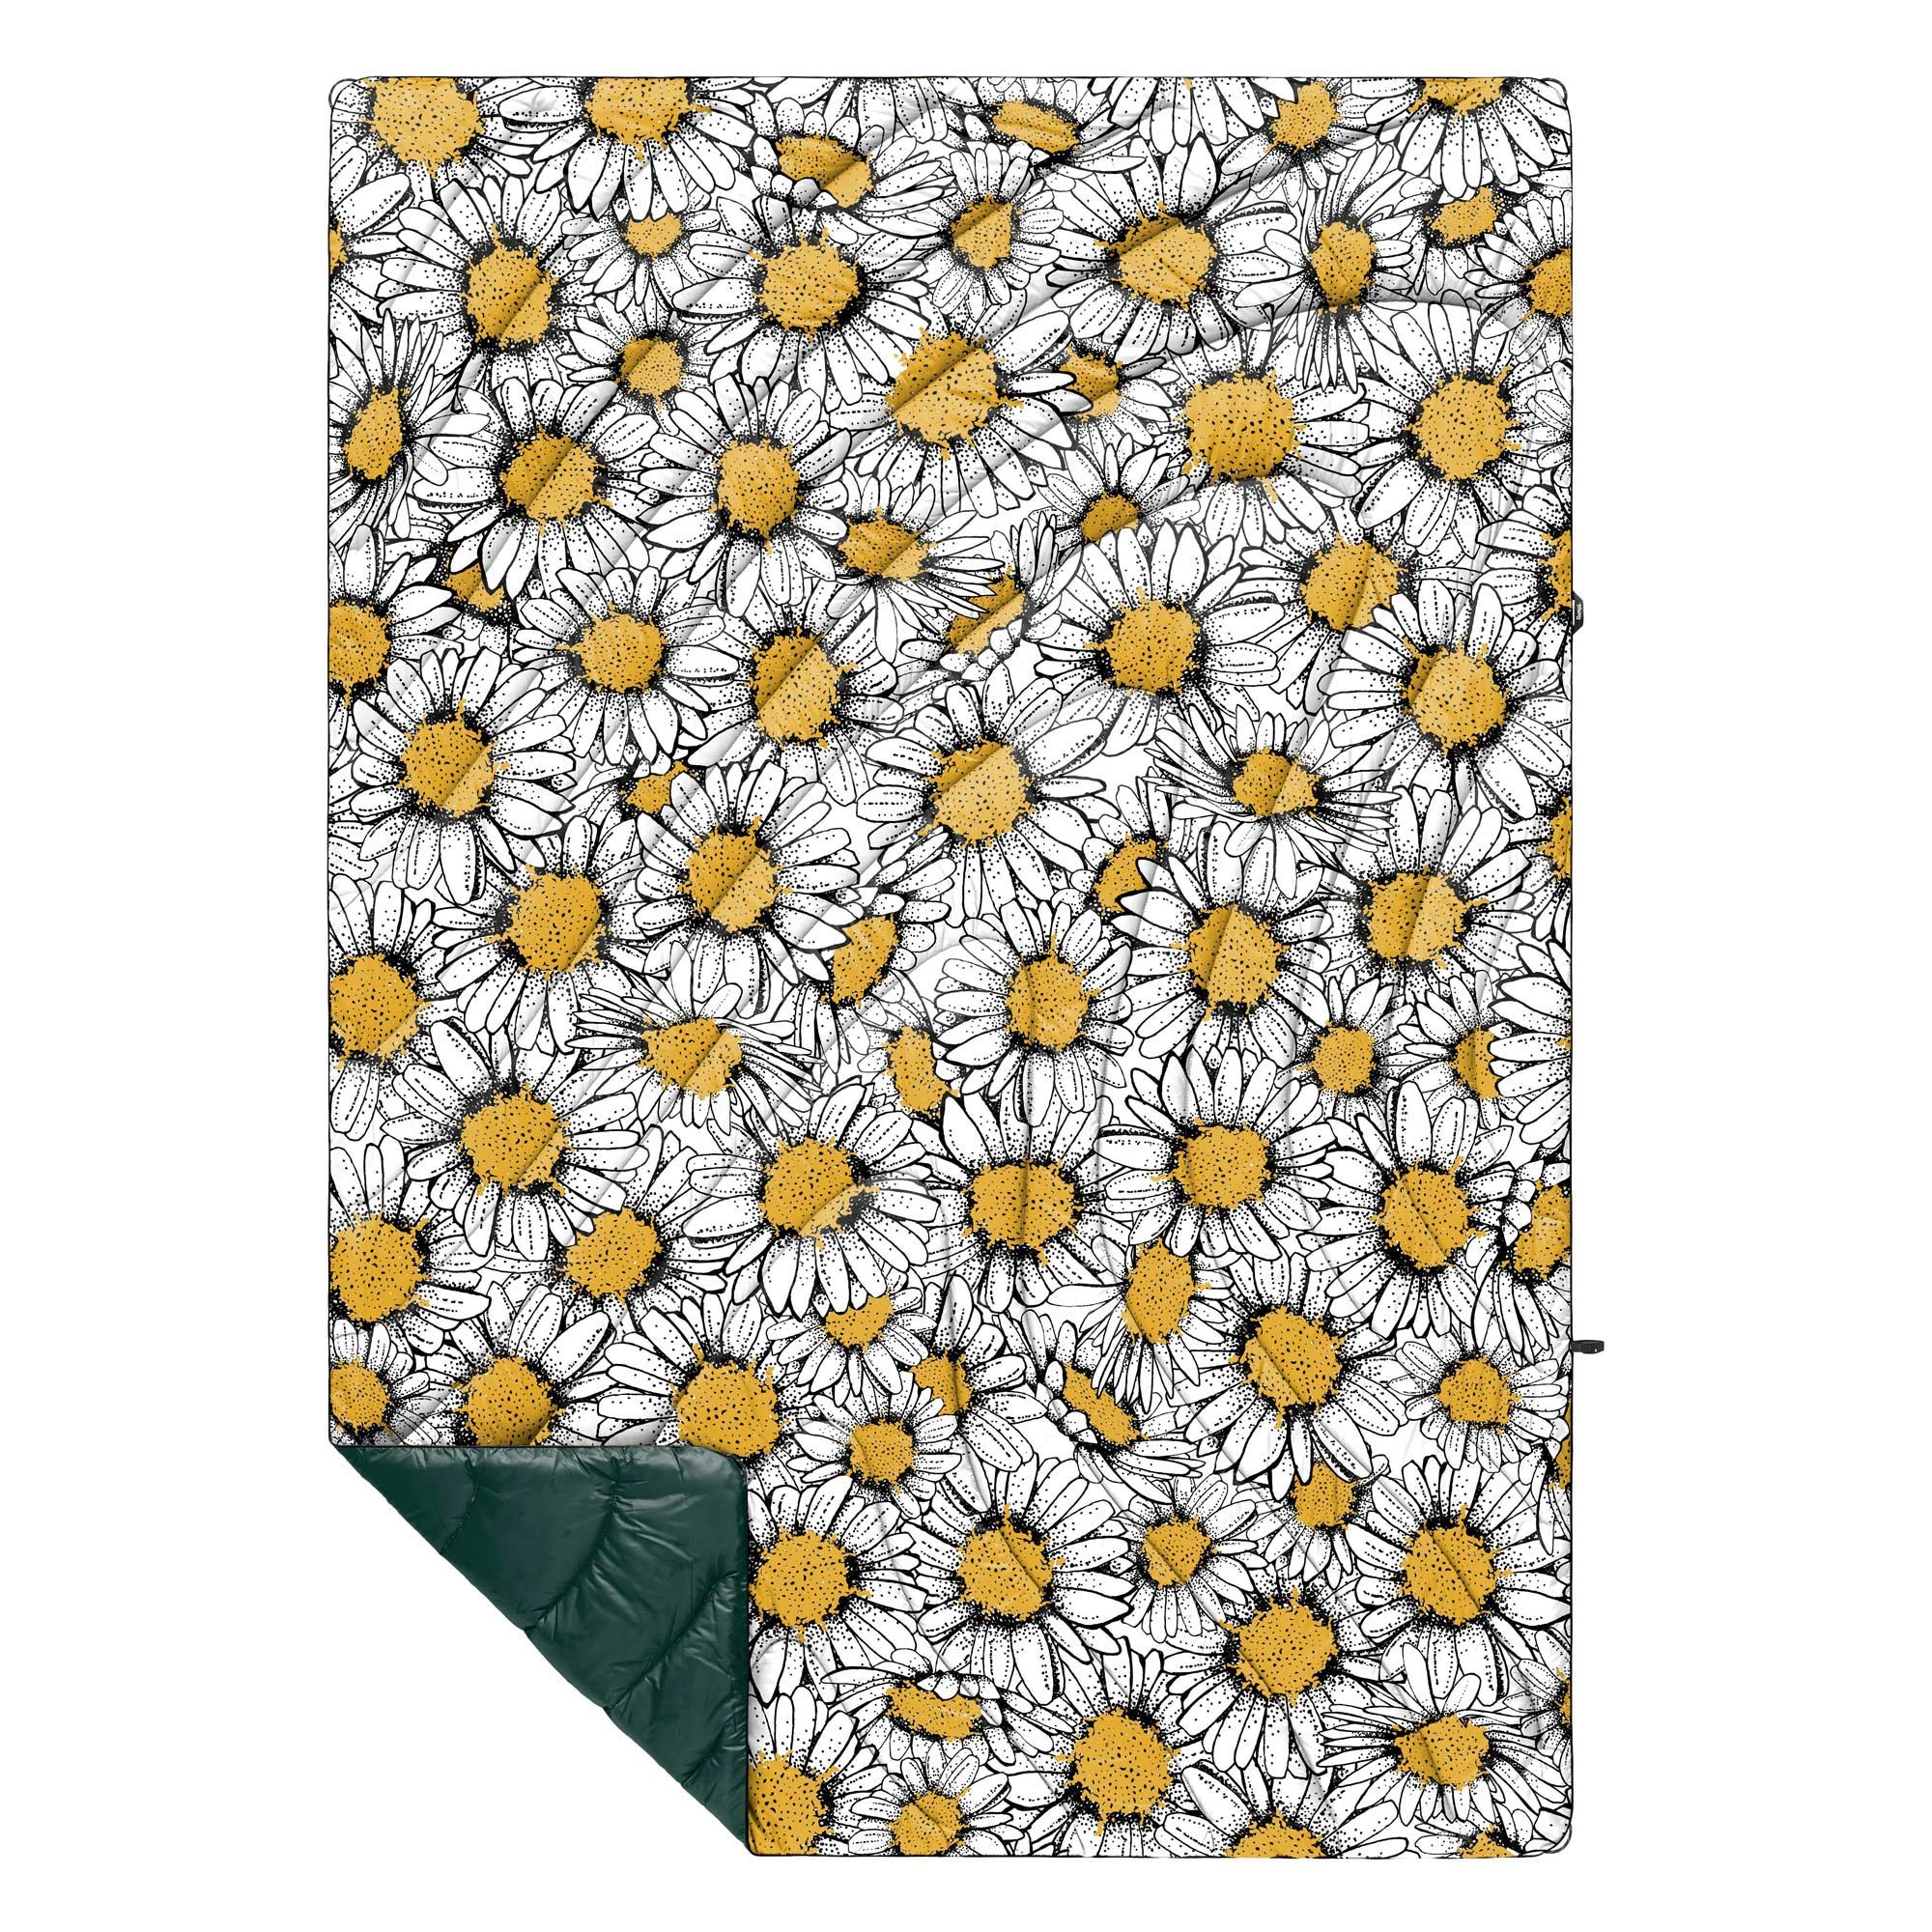 RUMPL Blanket ORIGINAL PUFFY PRINTED  / 1 PERS, daisy fields